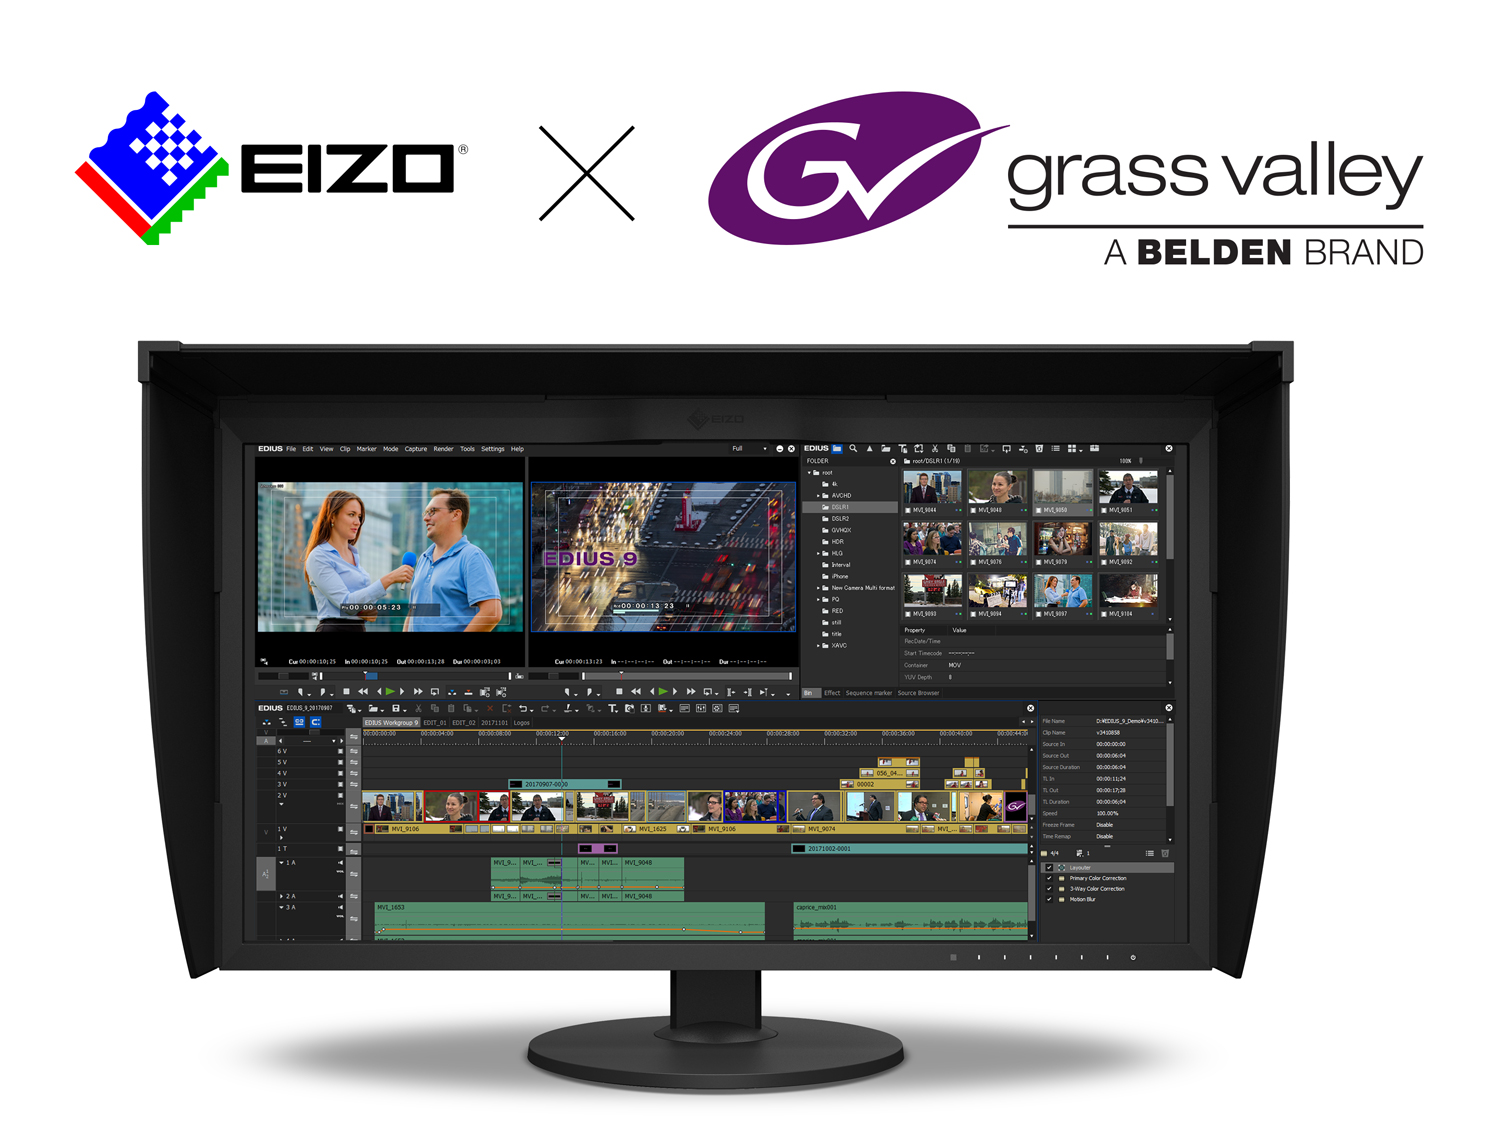 EIZO and Grass Valley collaboration press release